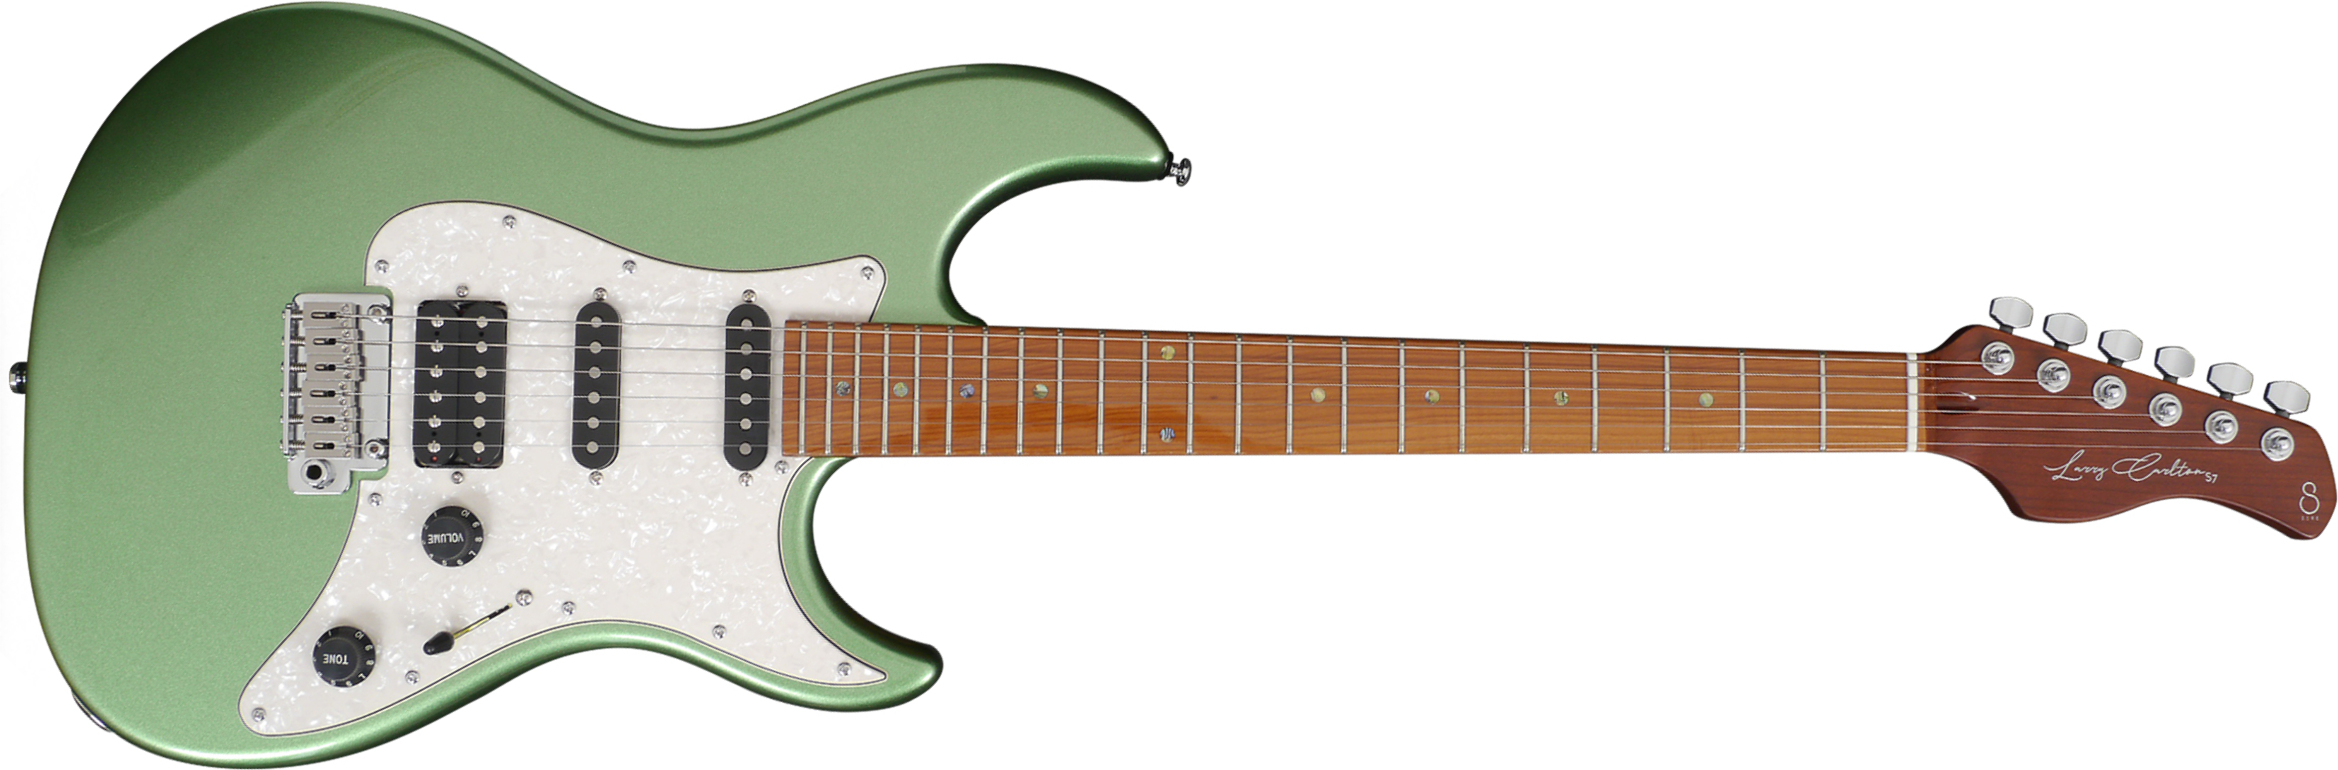 Sire Larry Carlton S7 Signature Hss Trem Eb - Seafoam Green - Str shape electric guitar - Main picture